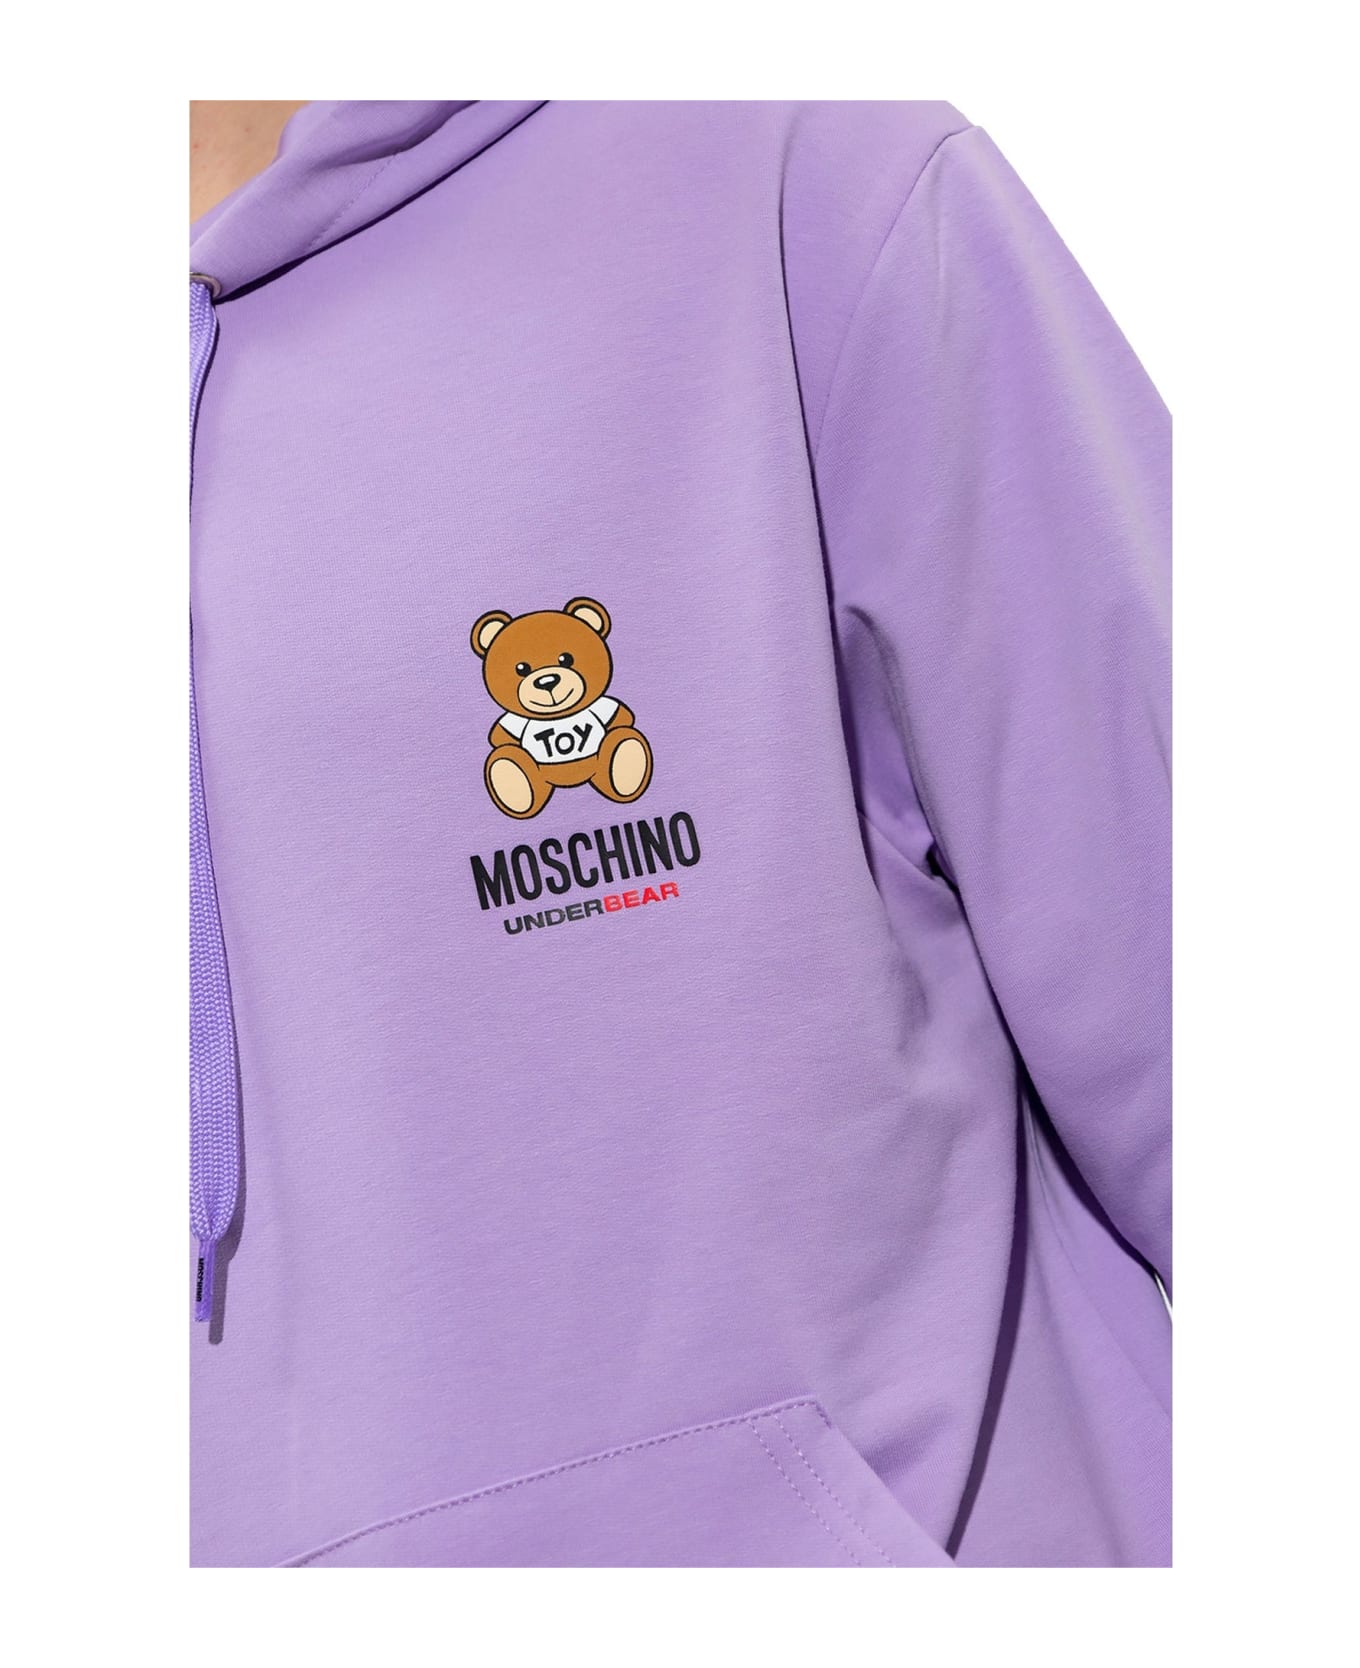 Moschino Underwear Logo Hooded Sweatshirt - Purple